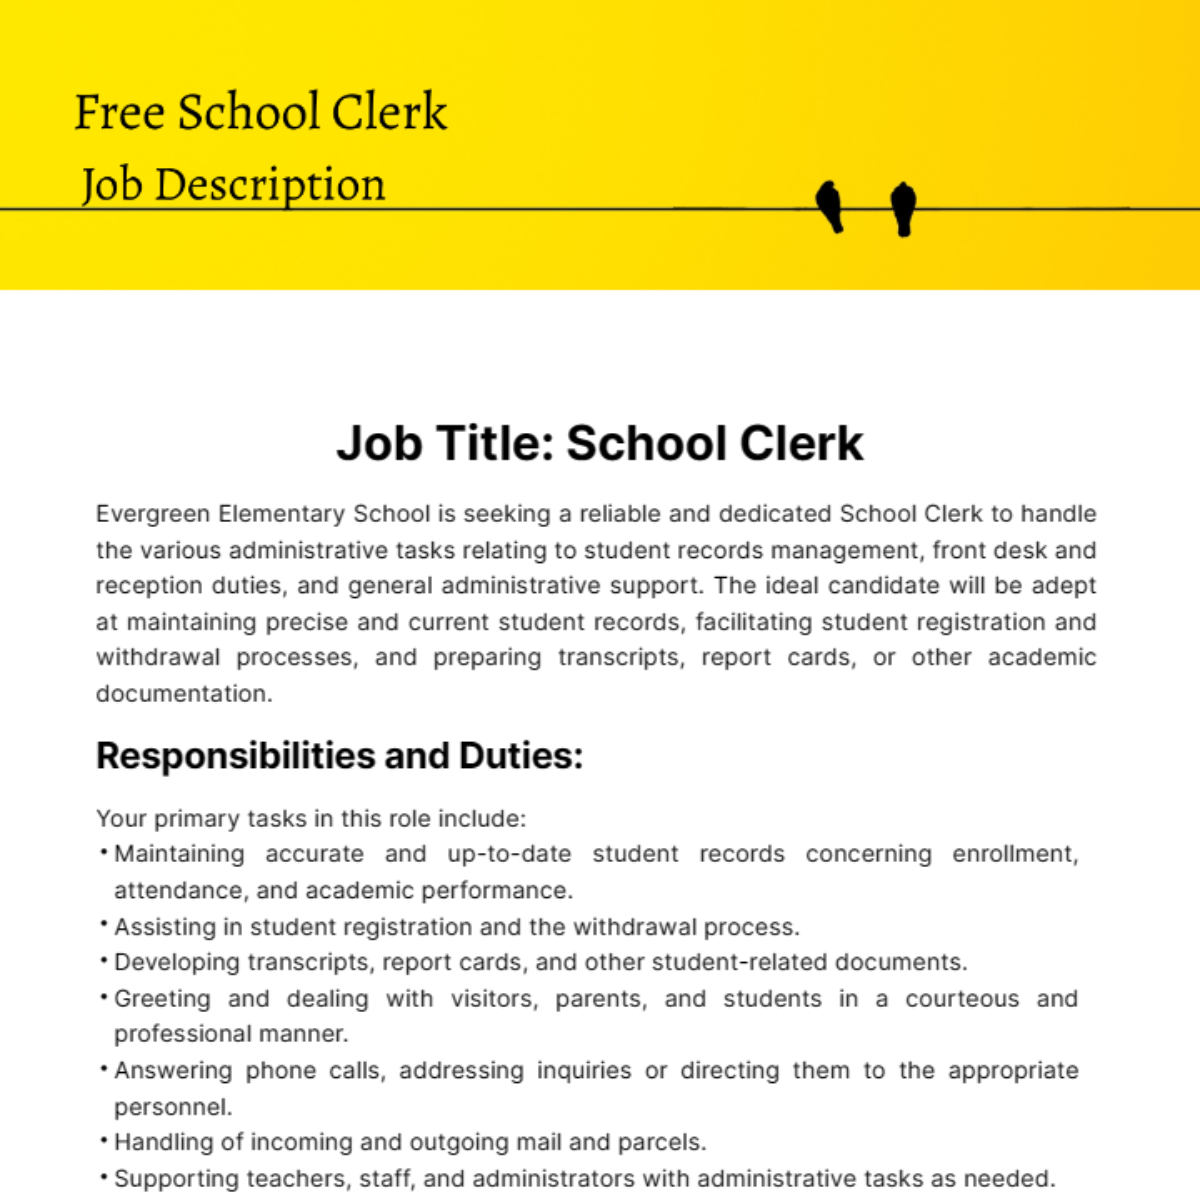 Free School Clerk Job Description Template